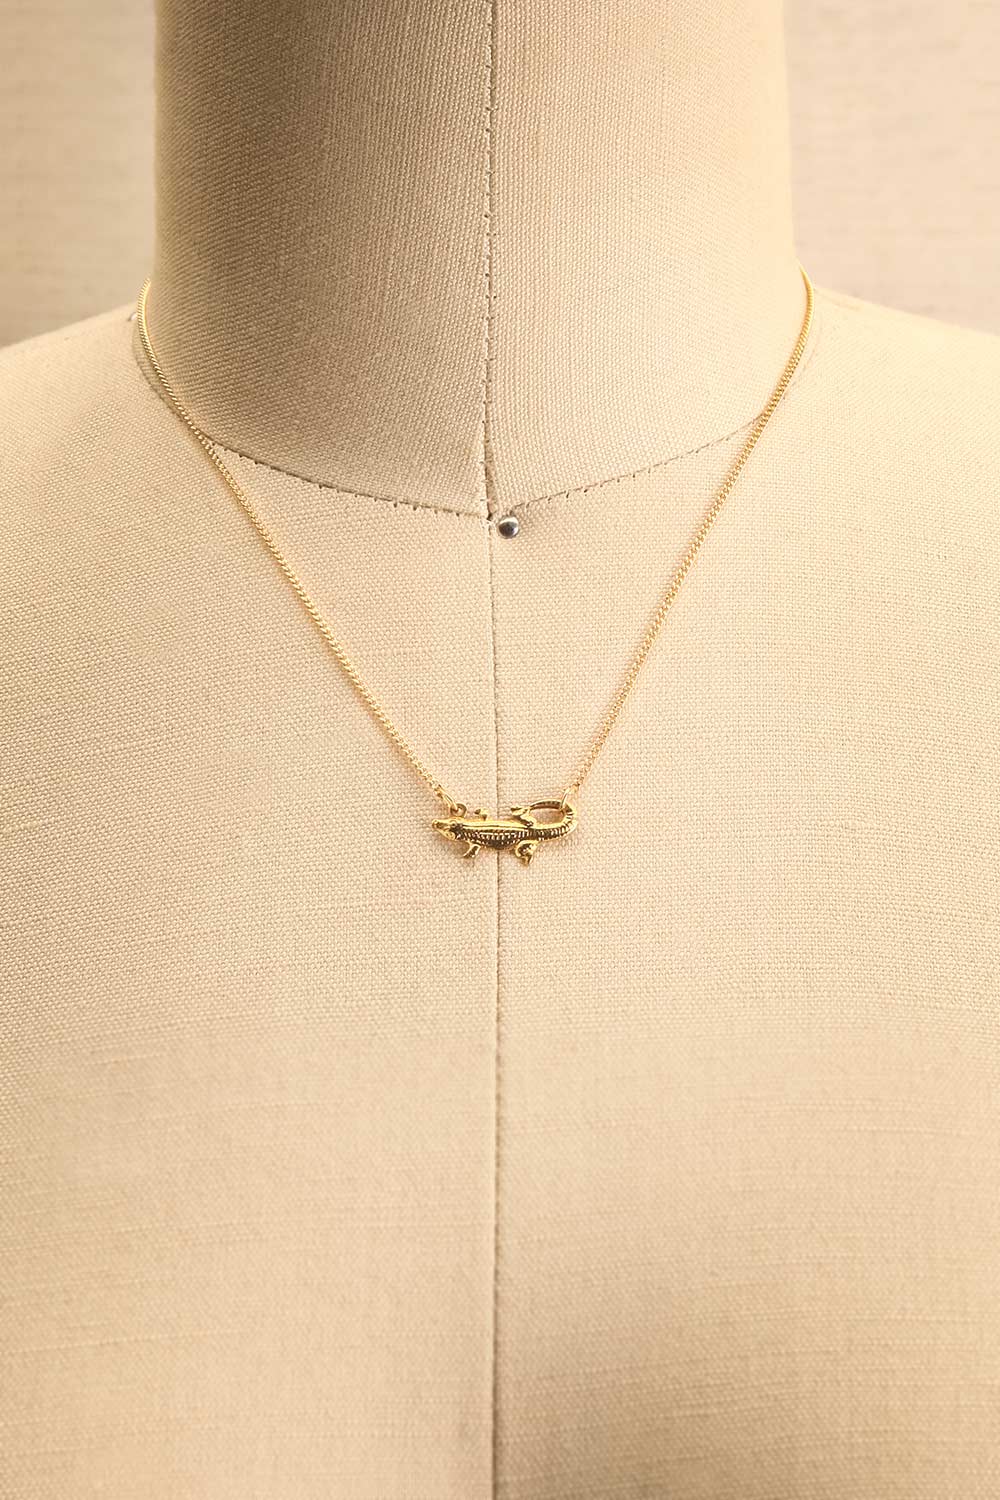 Docia Srey Golden Crocodile Pendant Necklace on mannequin | La Petite Garçonne